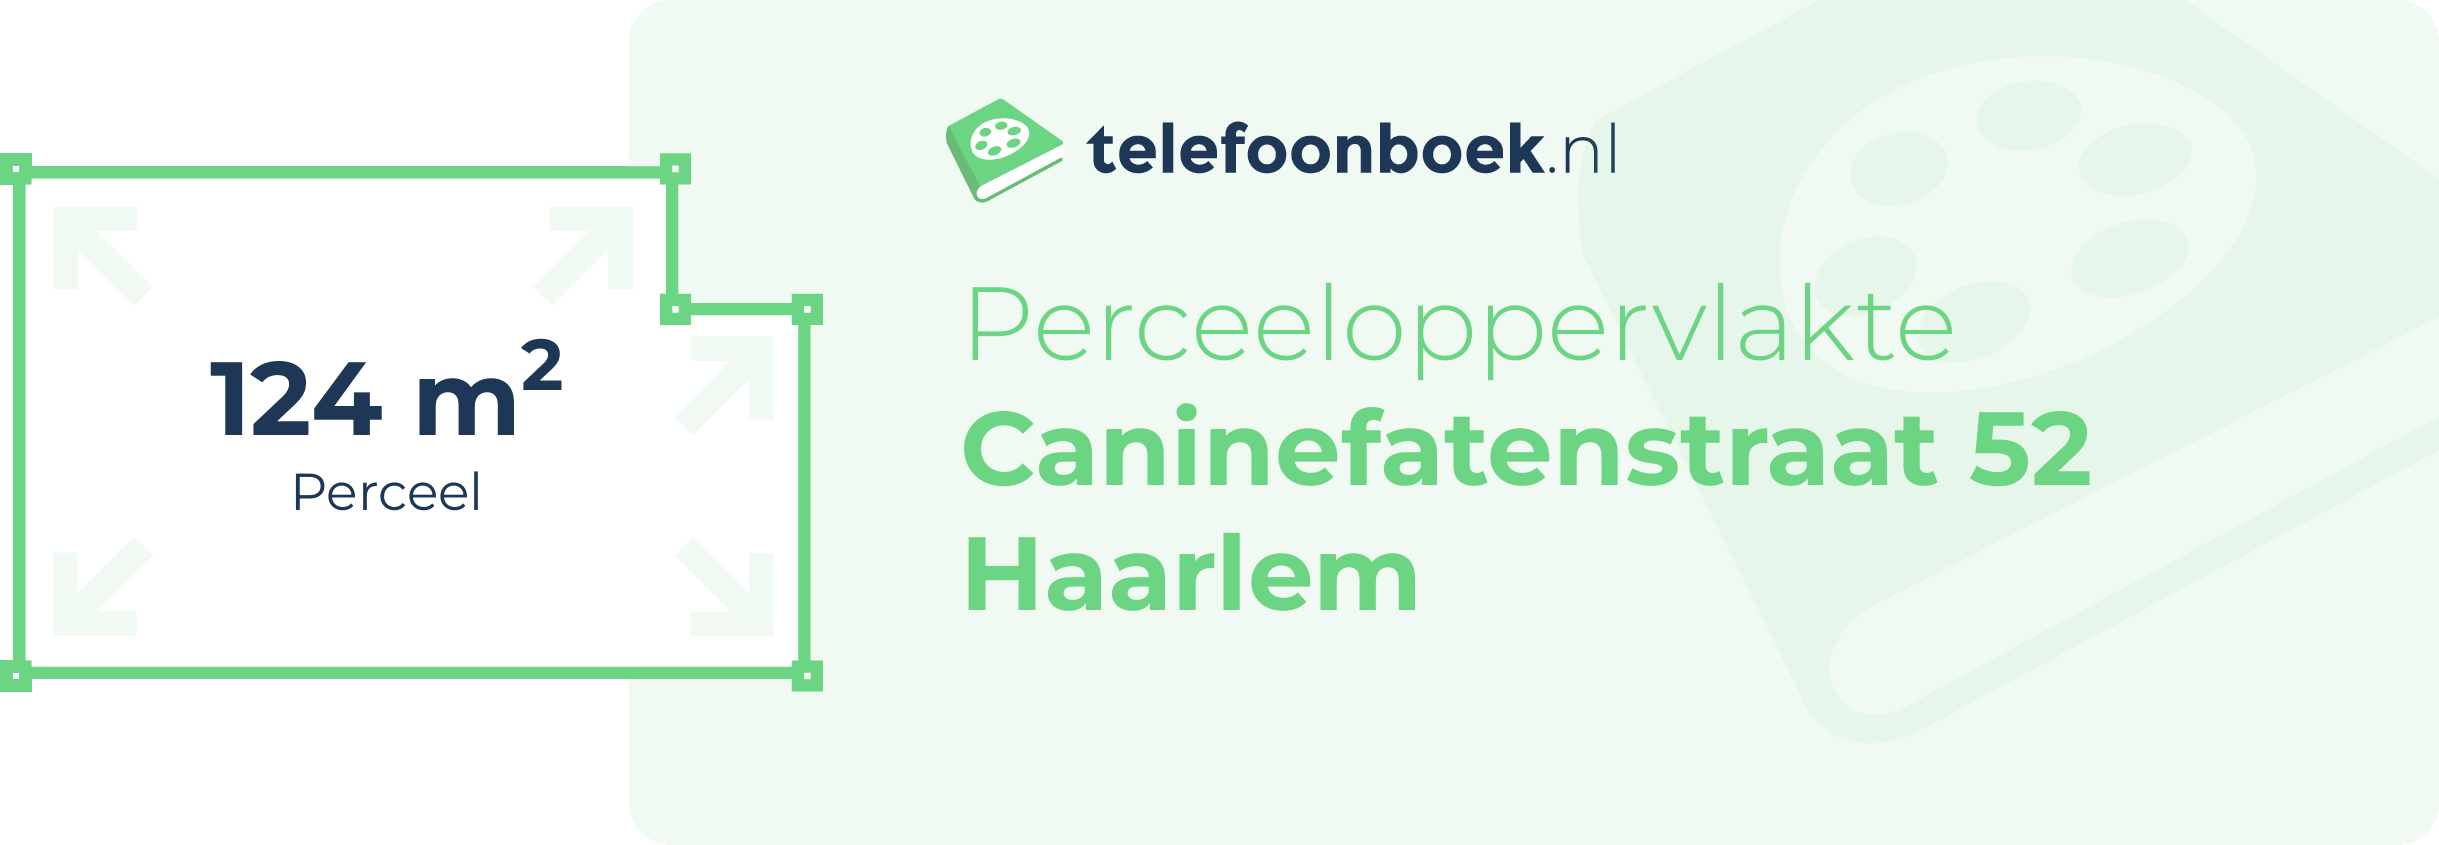 Perceeloppervlakte Caninefatenstraat 52 Haarlem